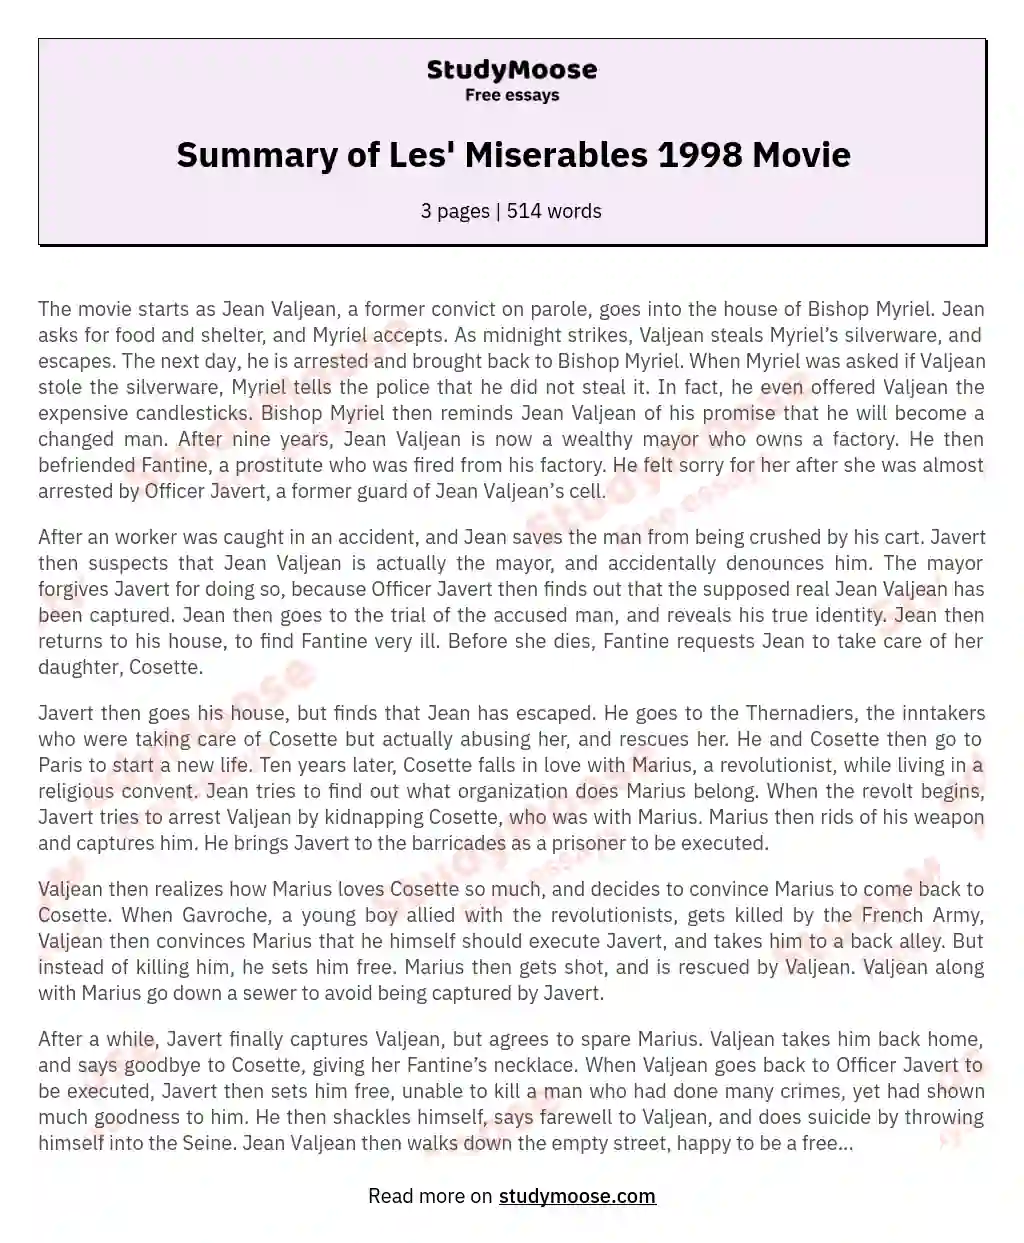 Summary of Les' Miserables 1998 Movie essay